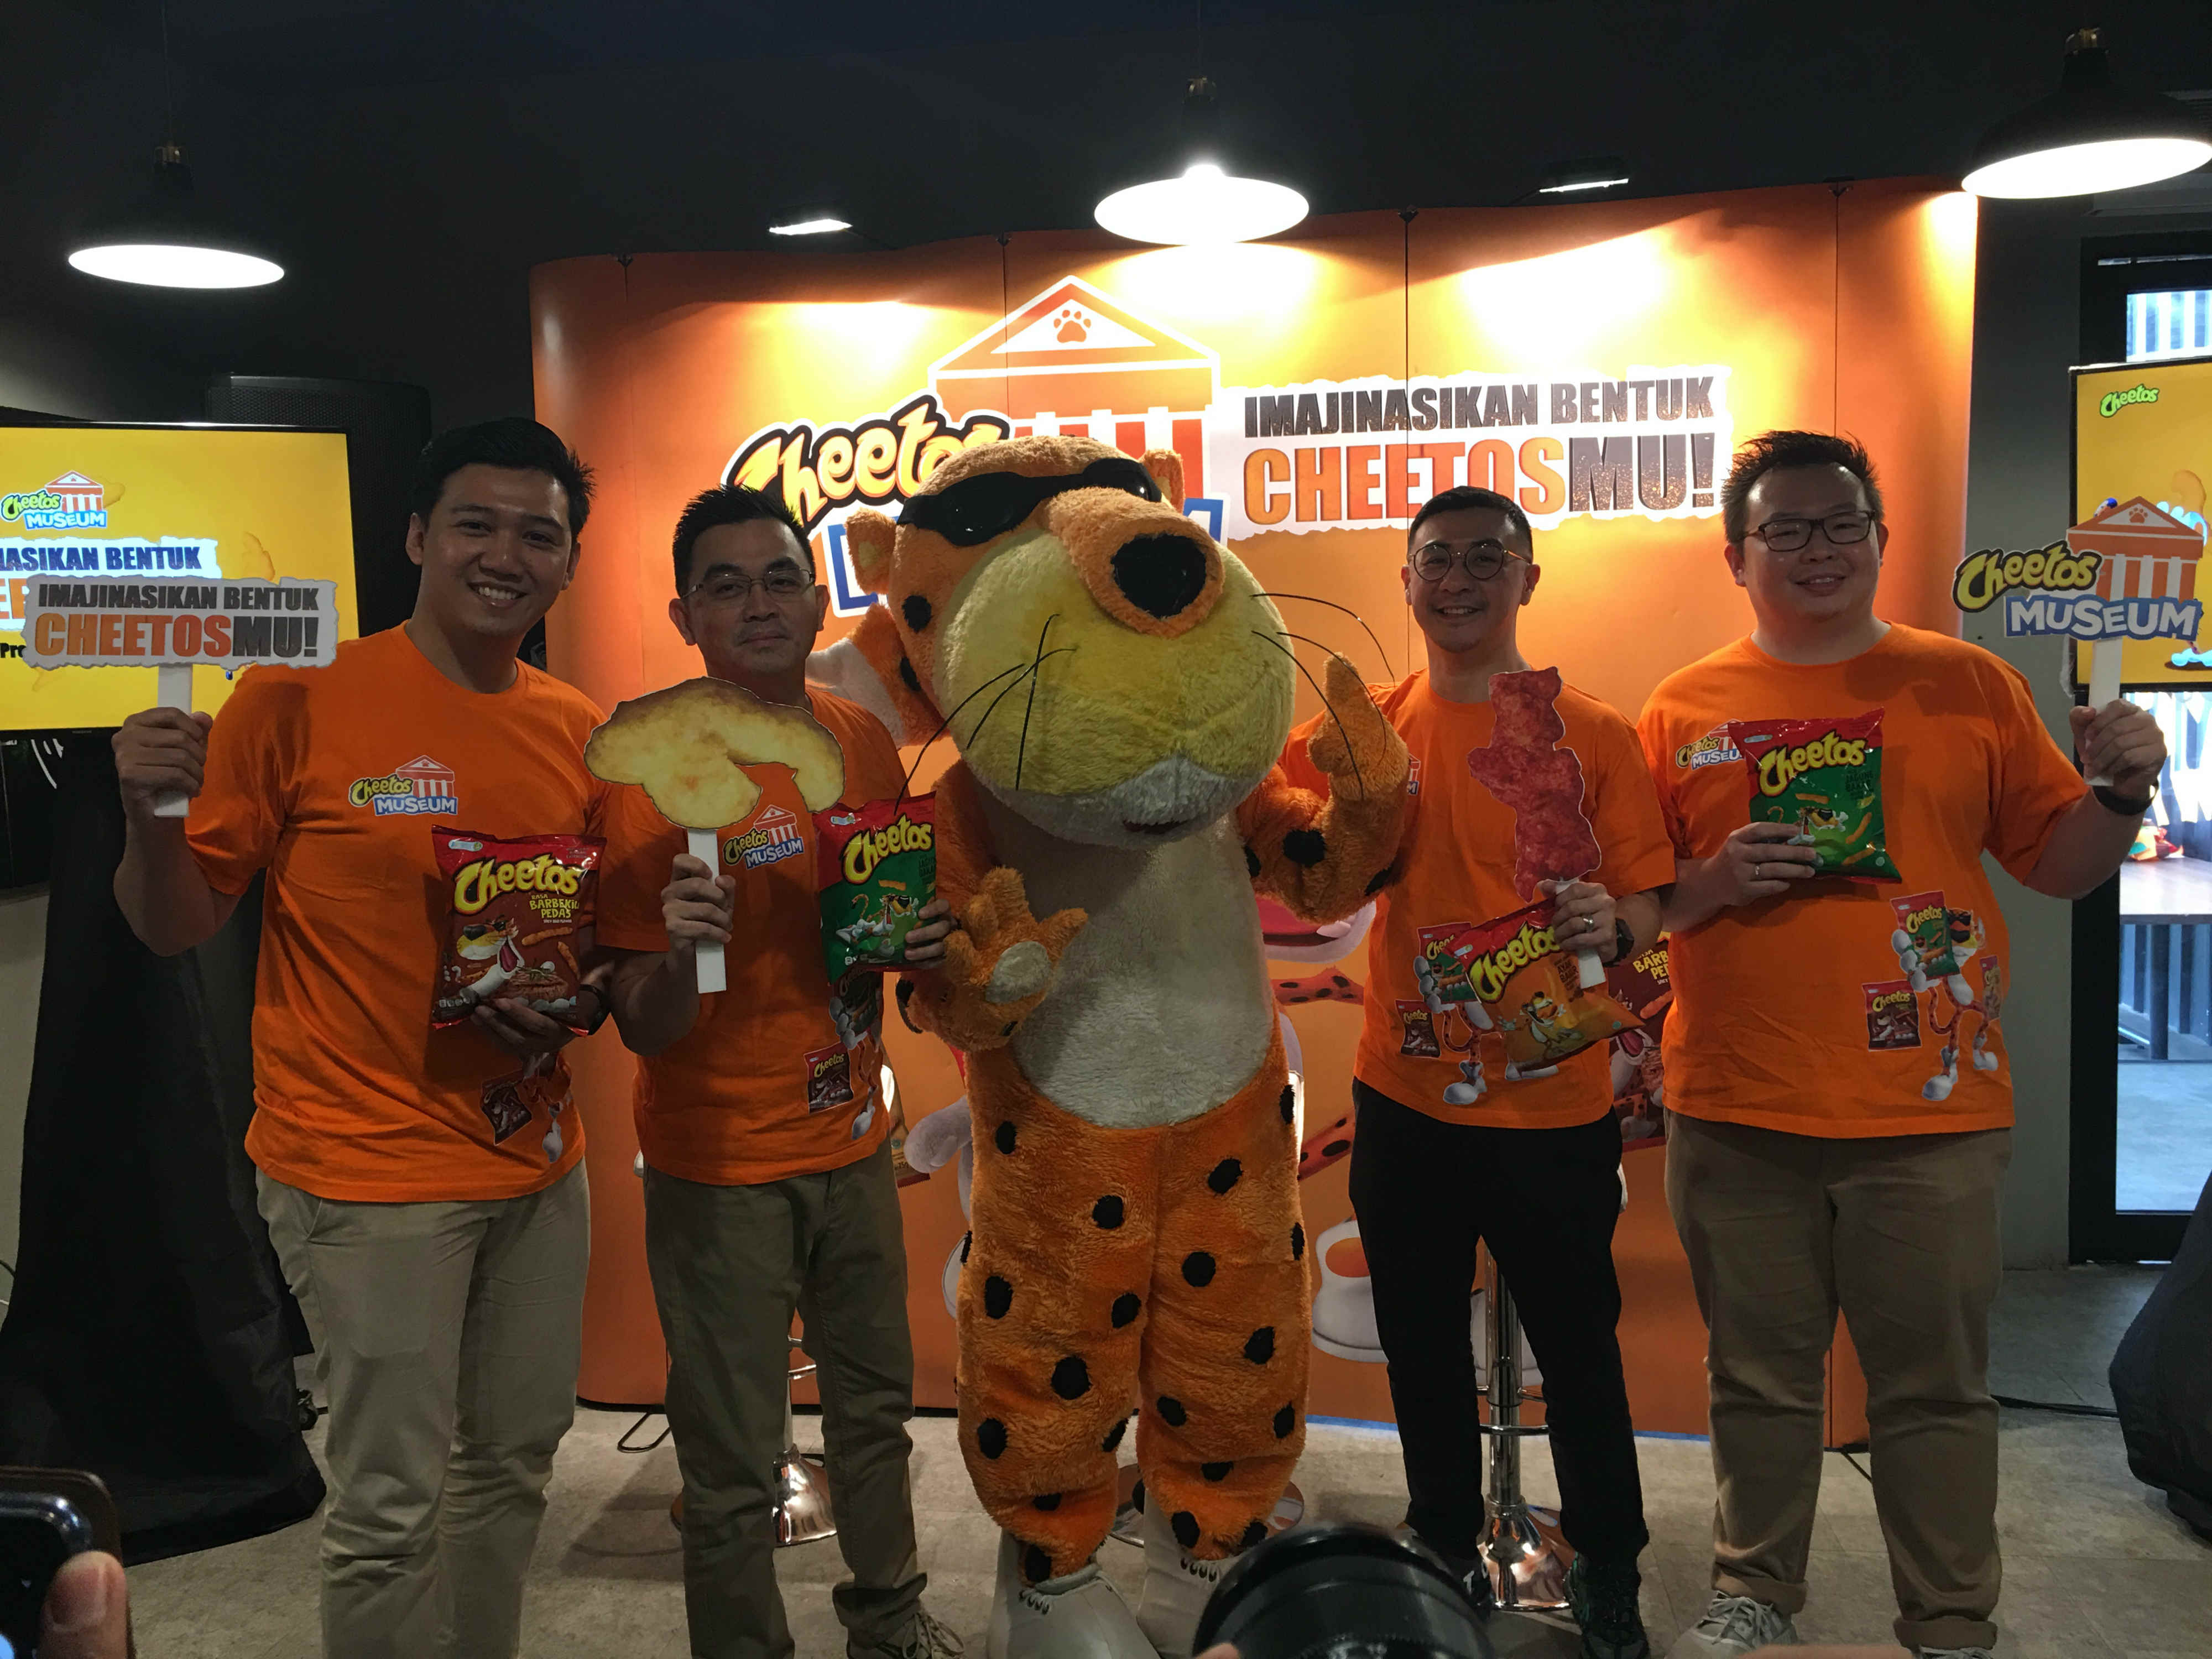 Cheetos Indonesia